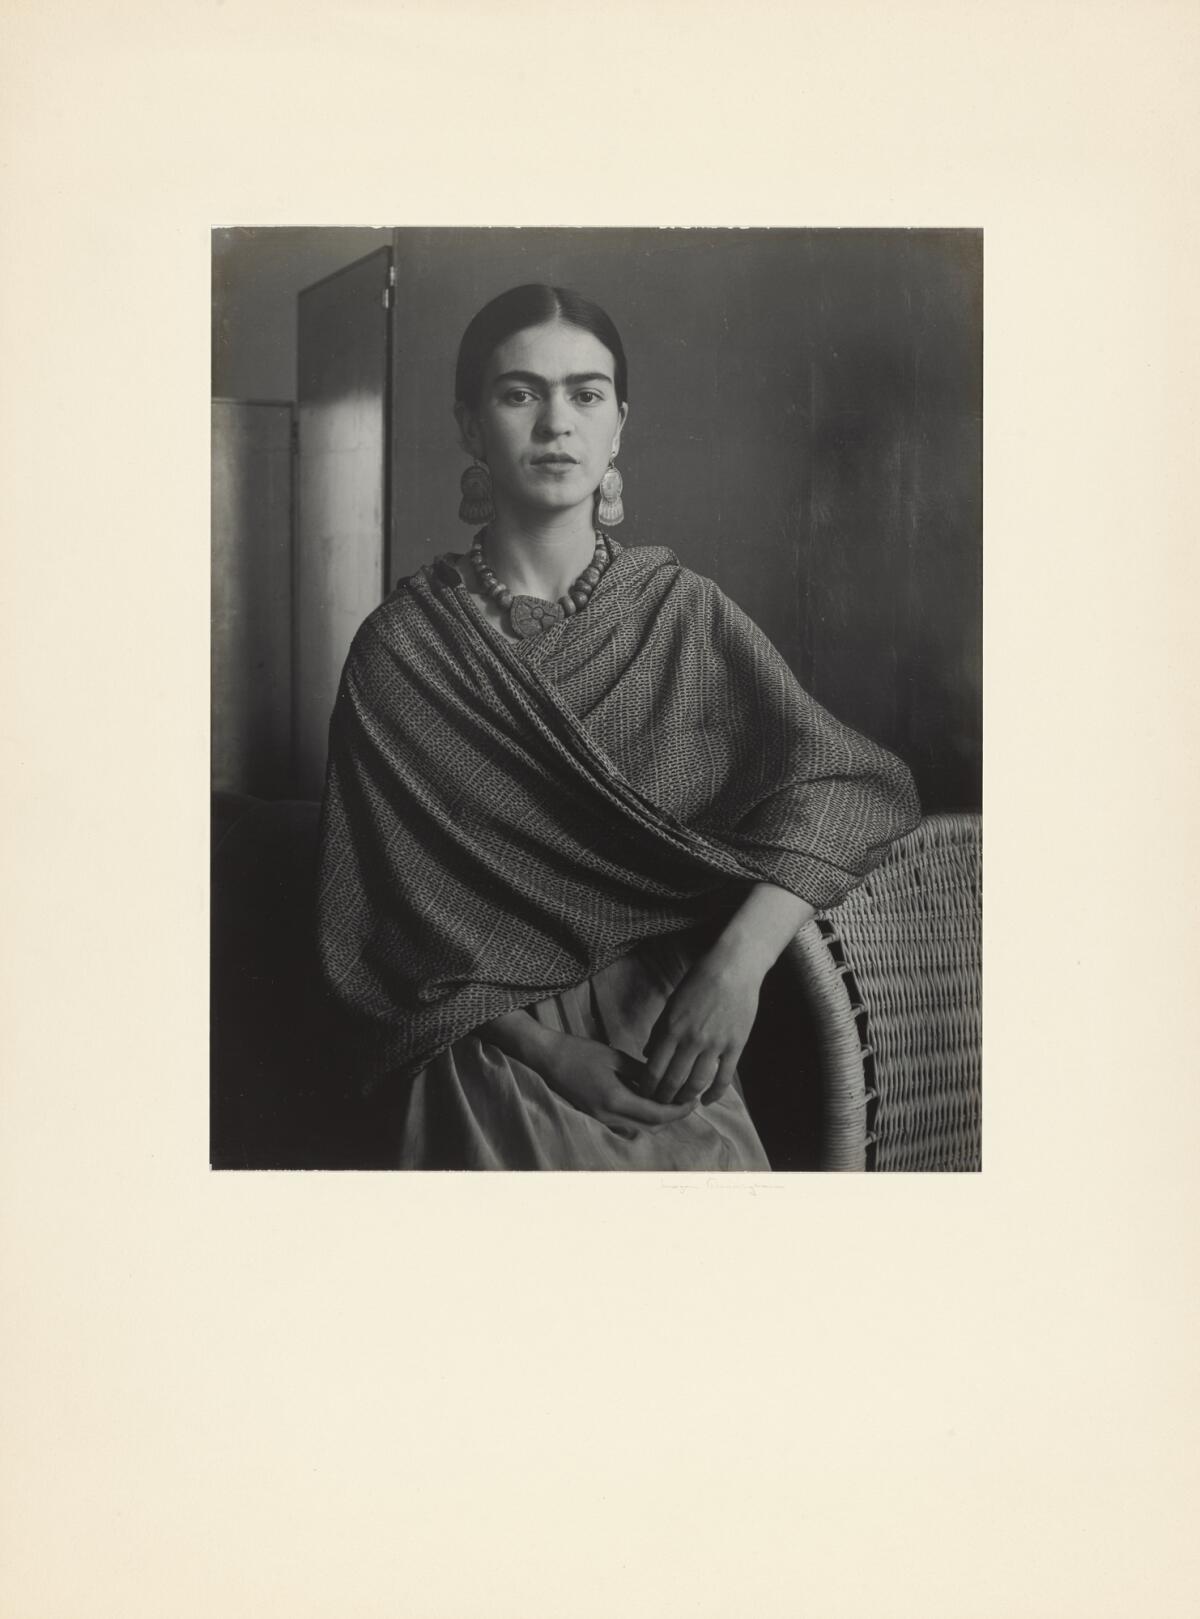 Imogen Cunningham, "Frida Kahlo Rivera," 1931, gelatin silver print.